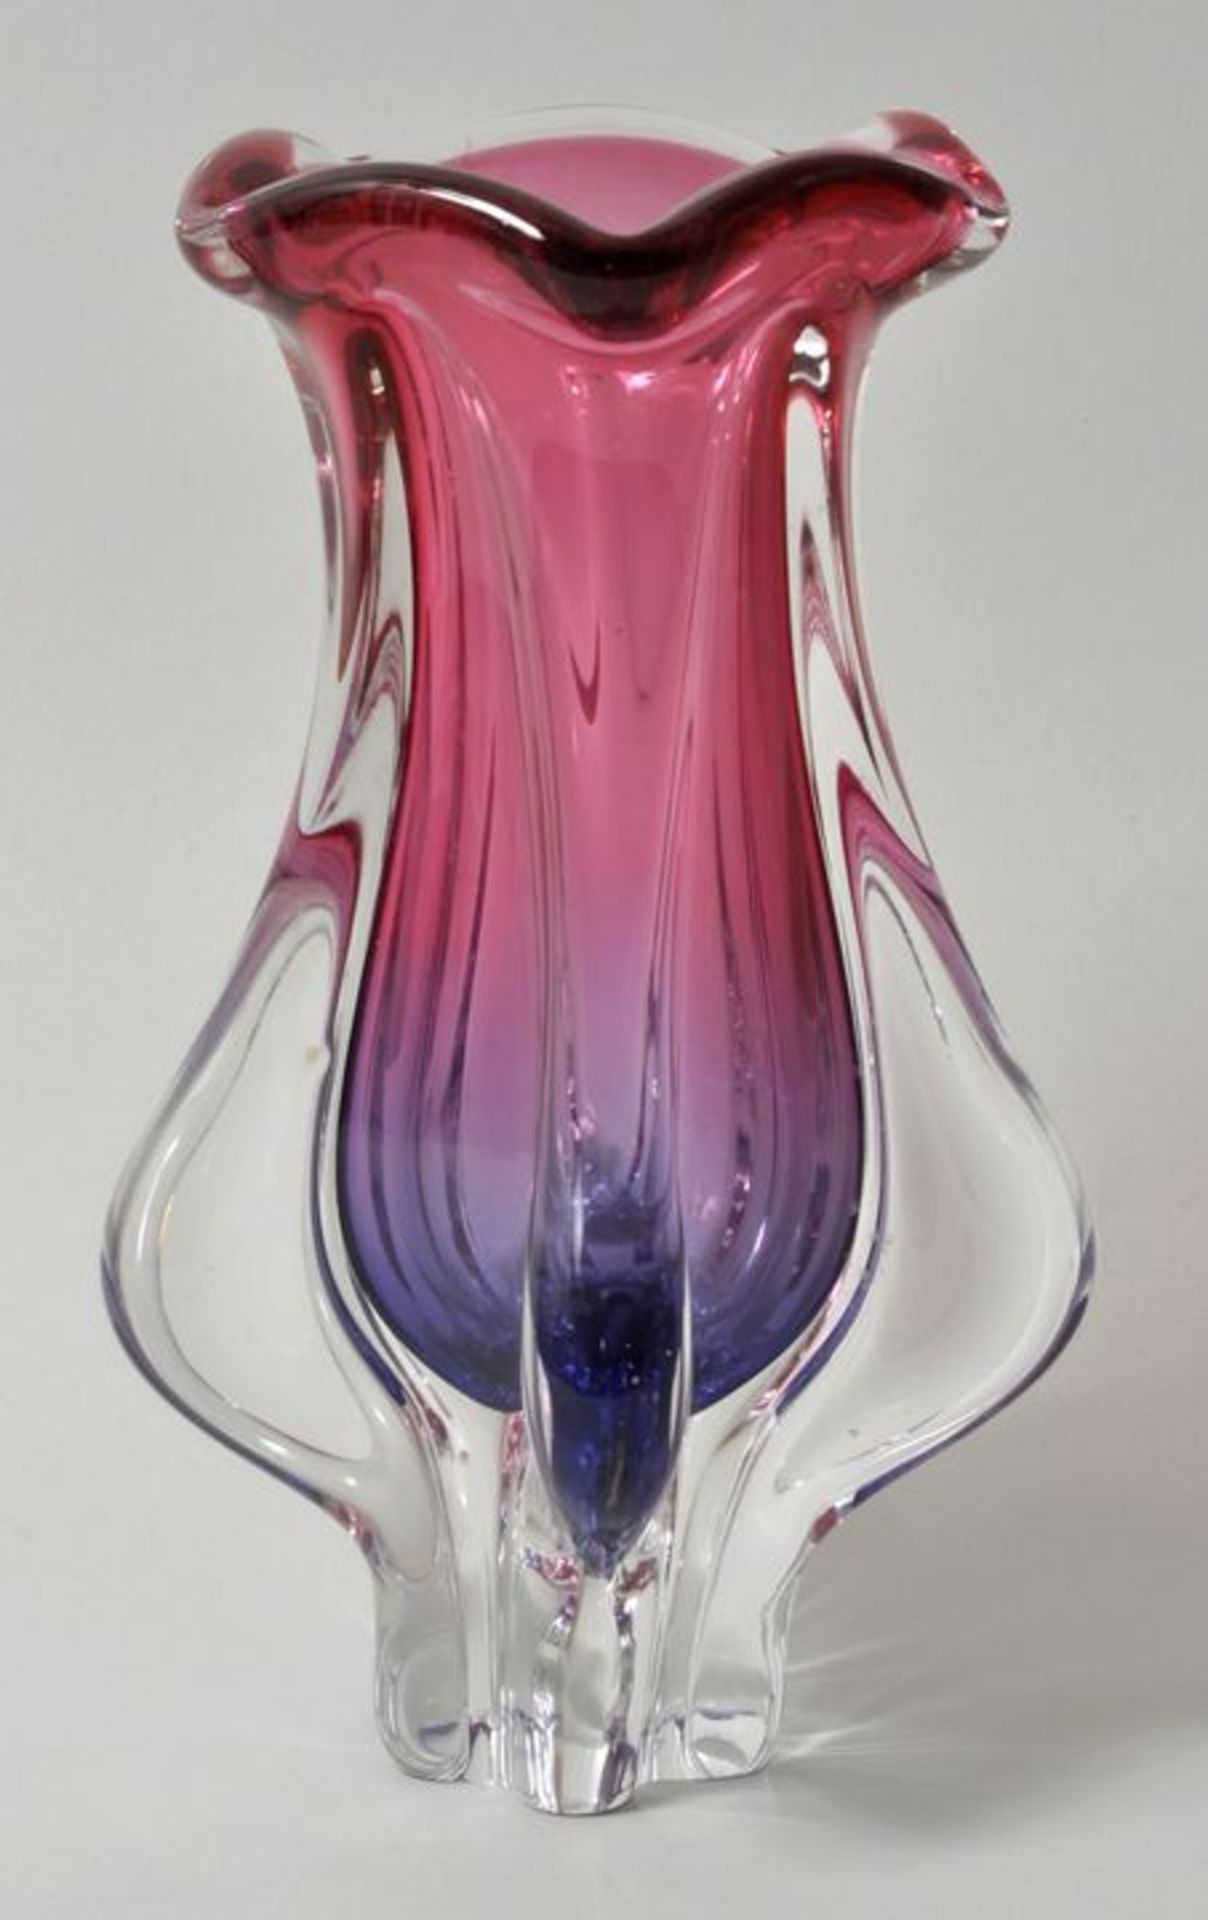 Vase, Chribska/ Czechoslowakei, wol Josef Hospodka, 2. H. 20. Jh.Farbloses Glas mit pinkfarbenem, in